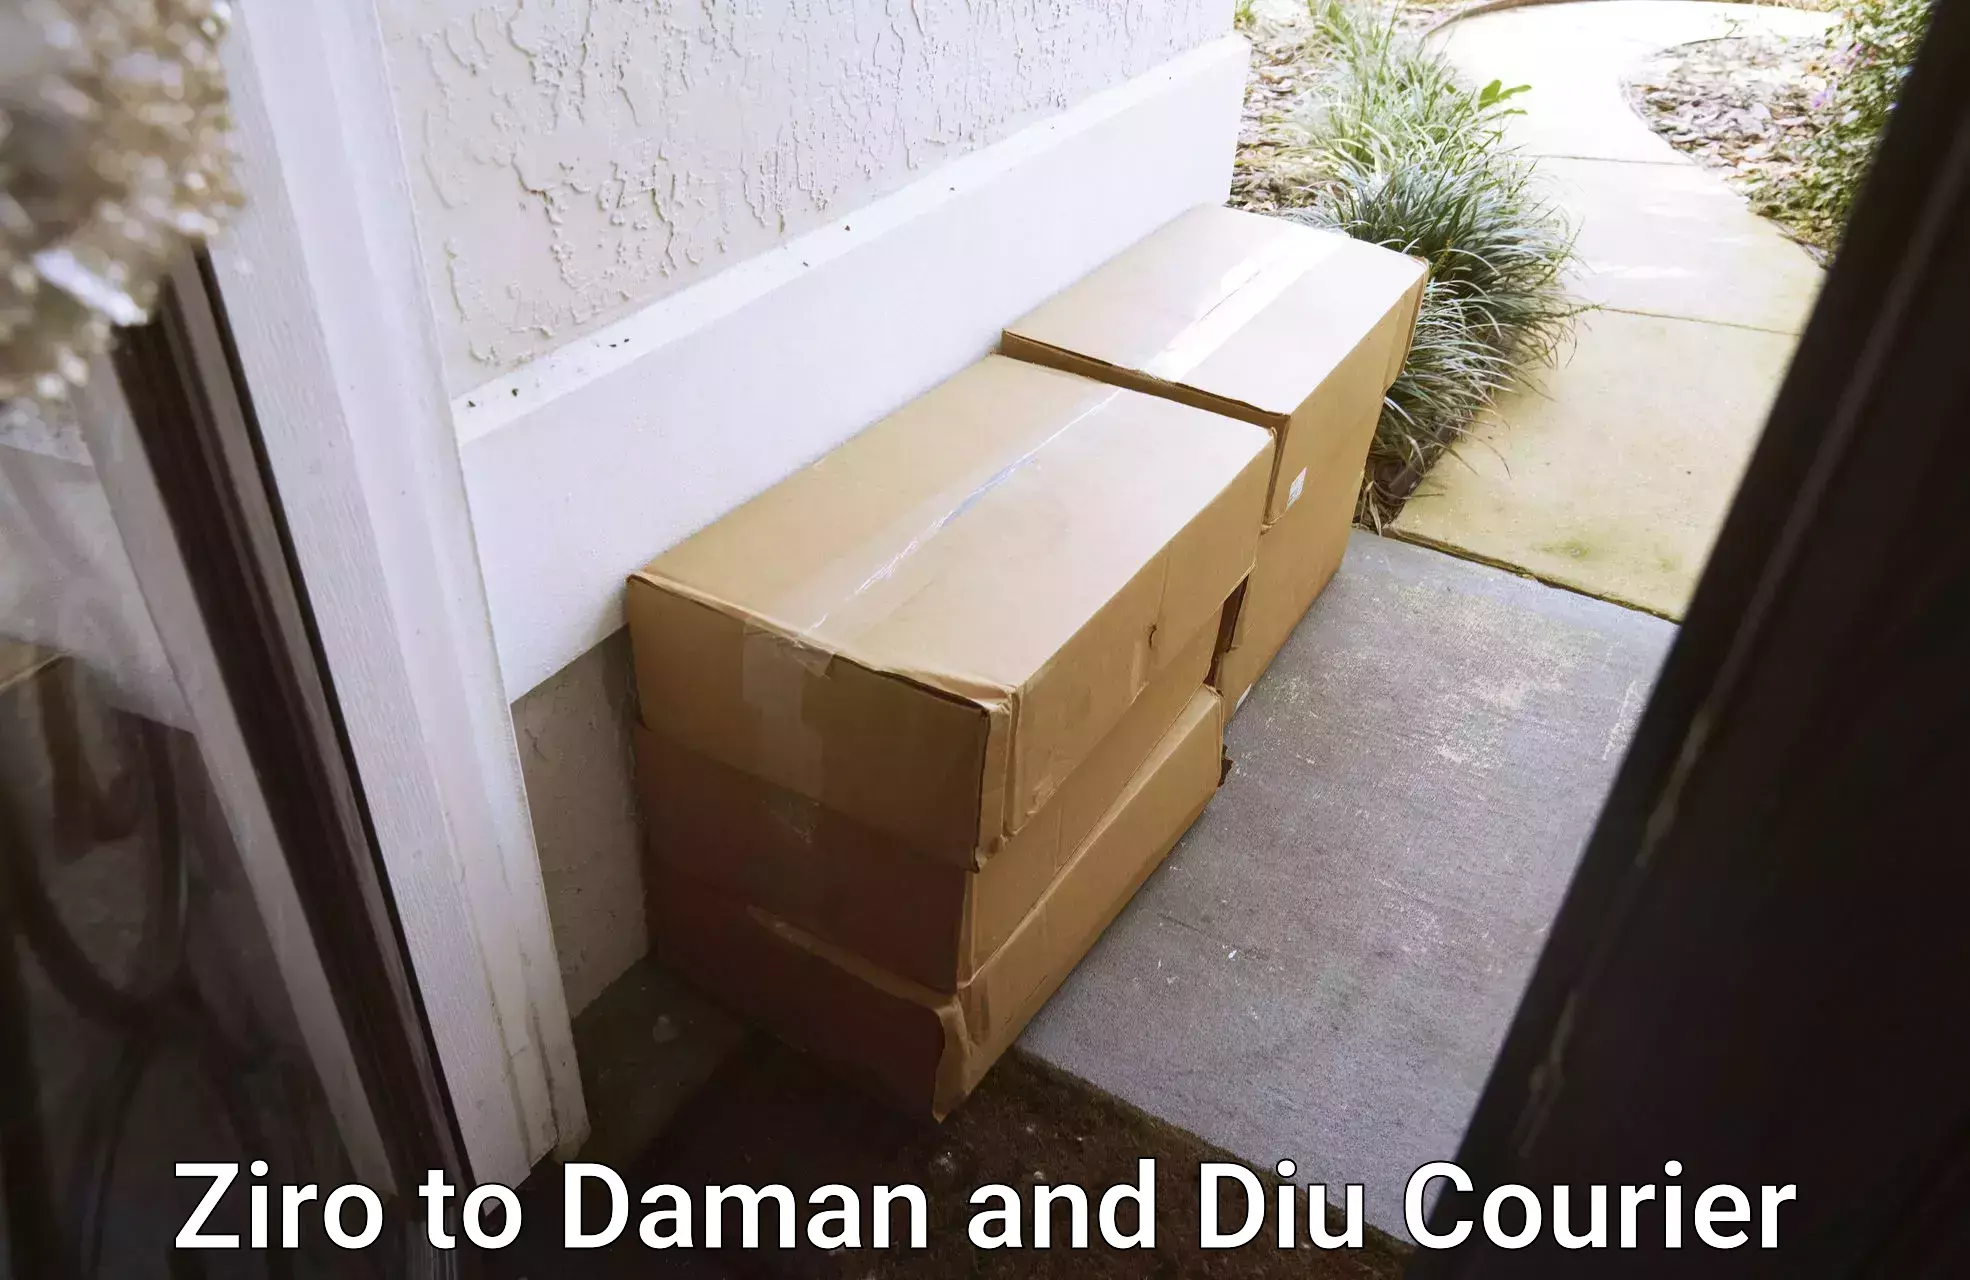 Weekend courier service Ziro to Daman and Diu